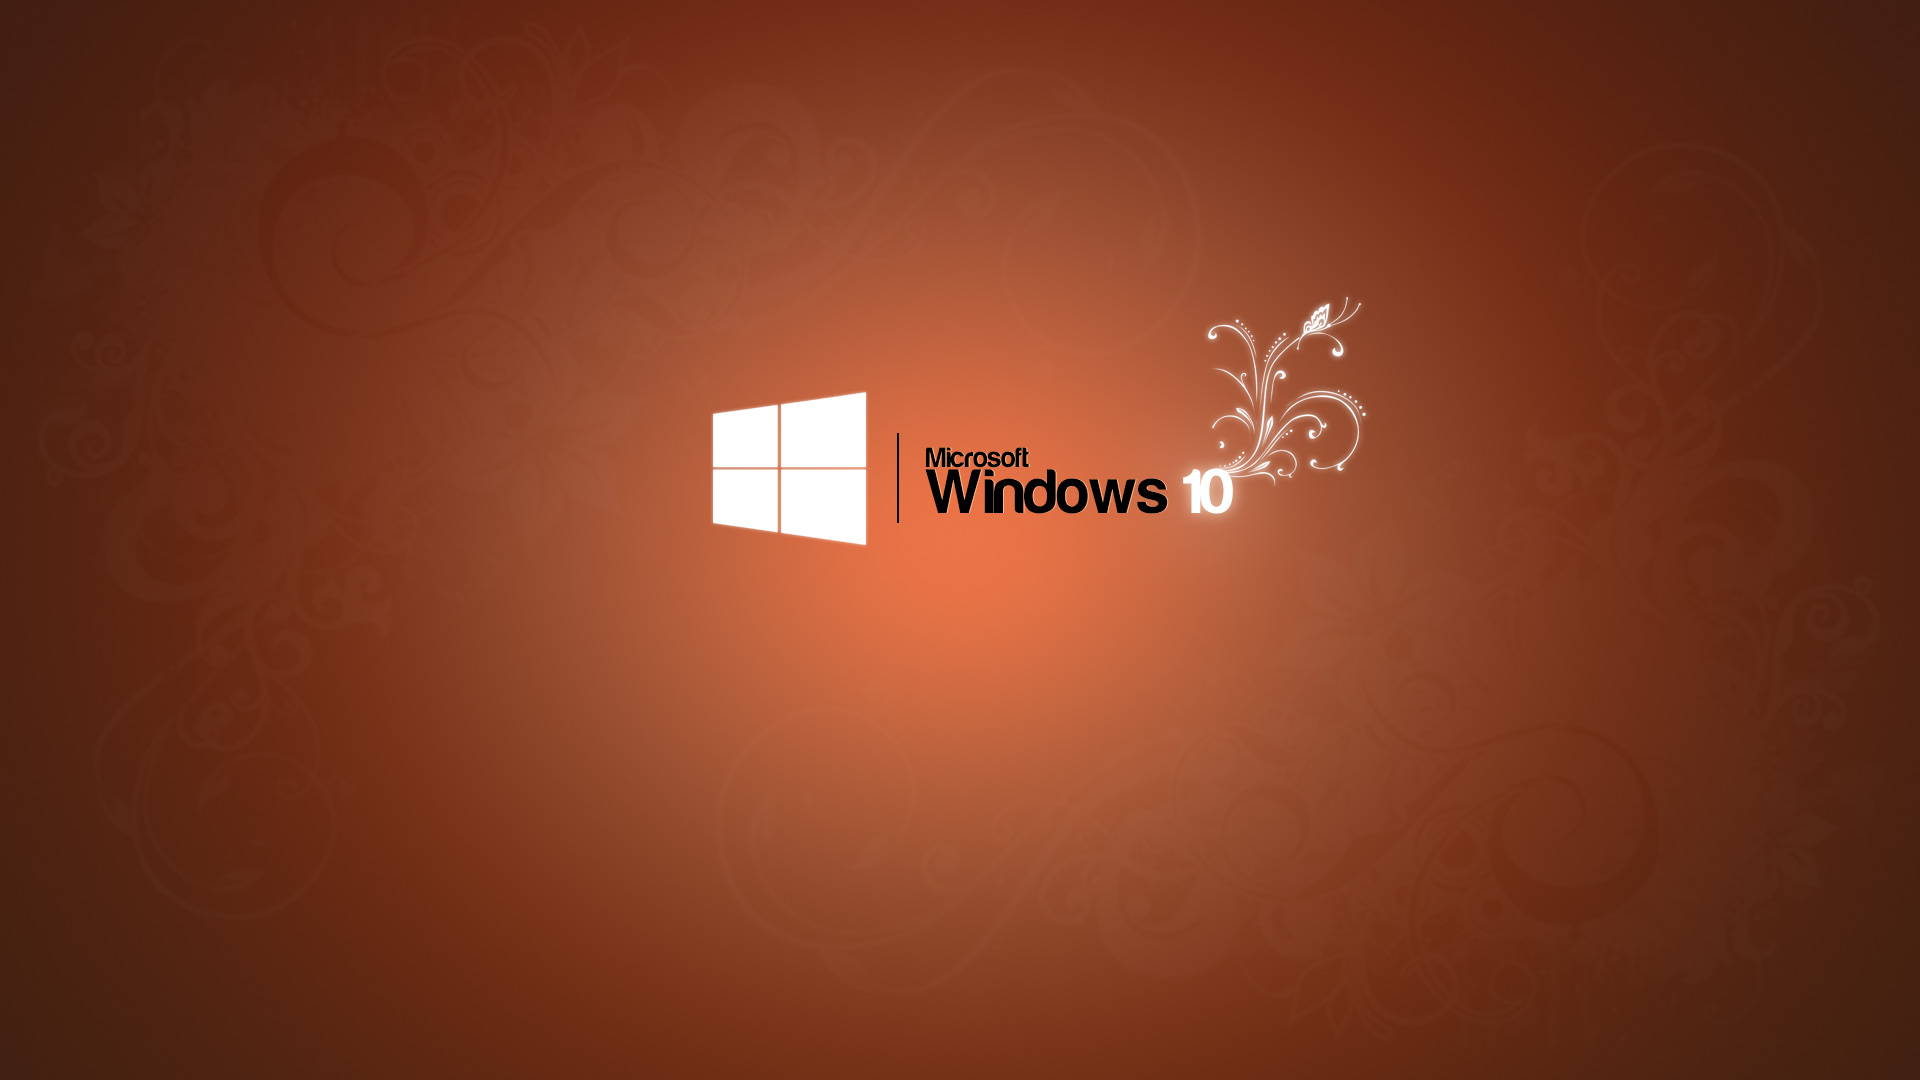 45+] Free Windows 10 Wallpaper 1920x1080 - WallpaperSafari